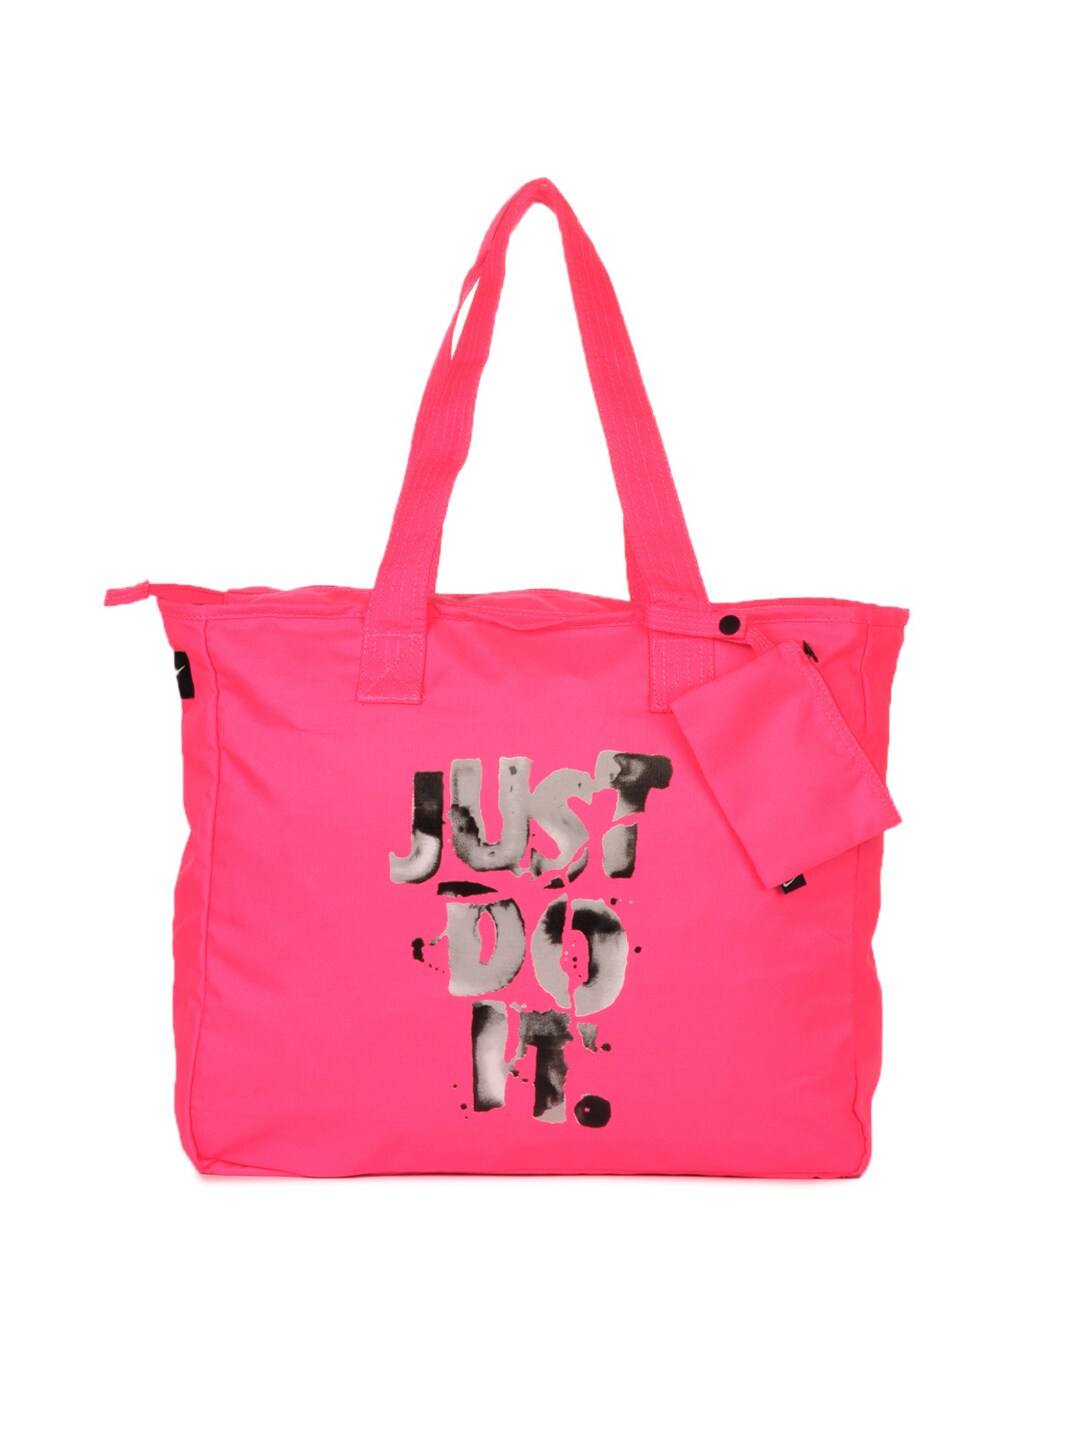 Nike Women Track Tote Pink Handbag